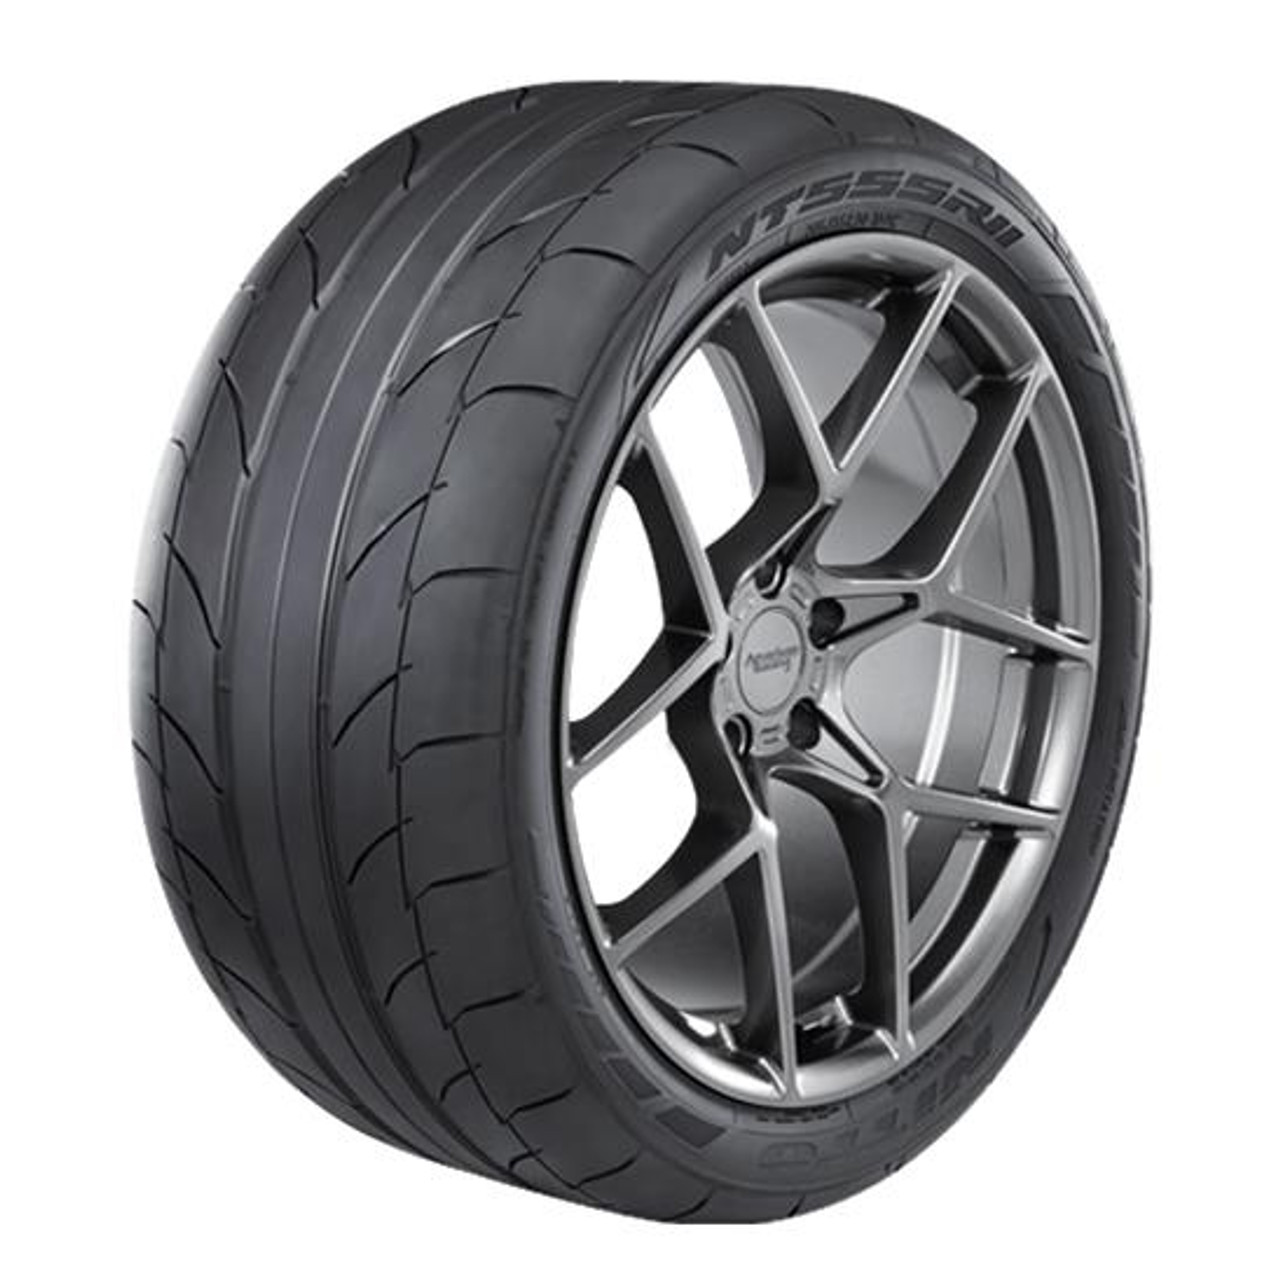 Nitto NT555R II 325/50/15 Drag Radial Tire